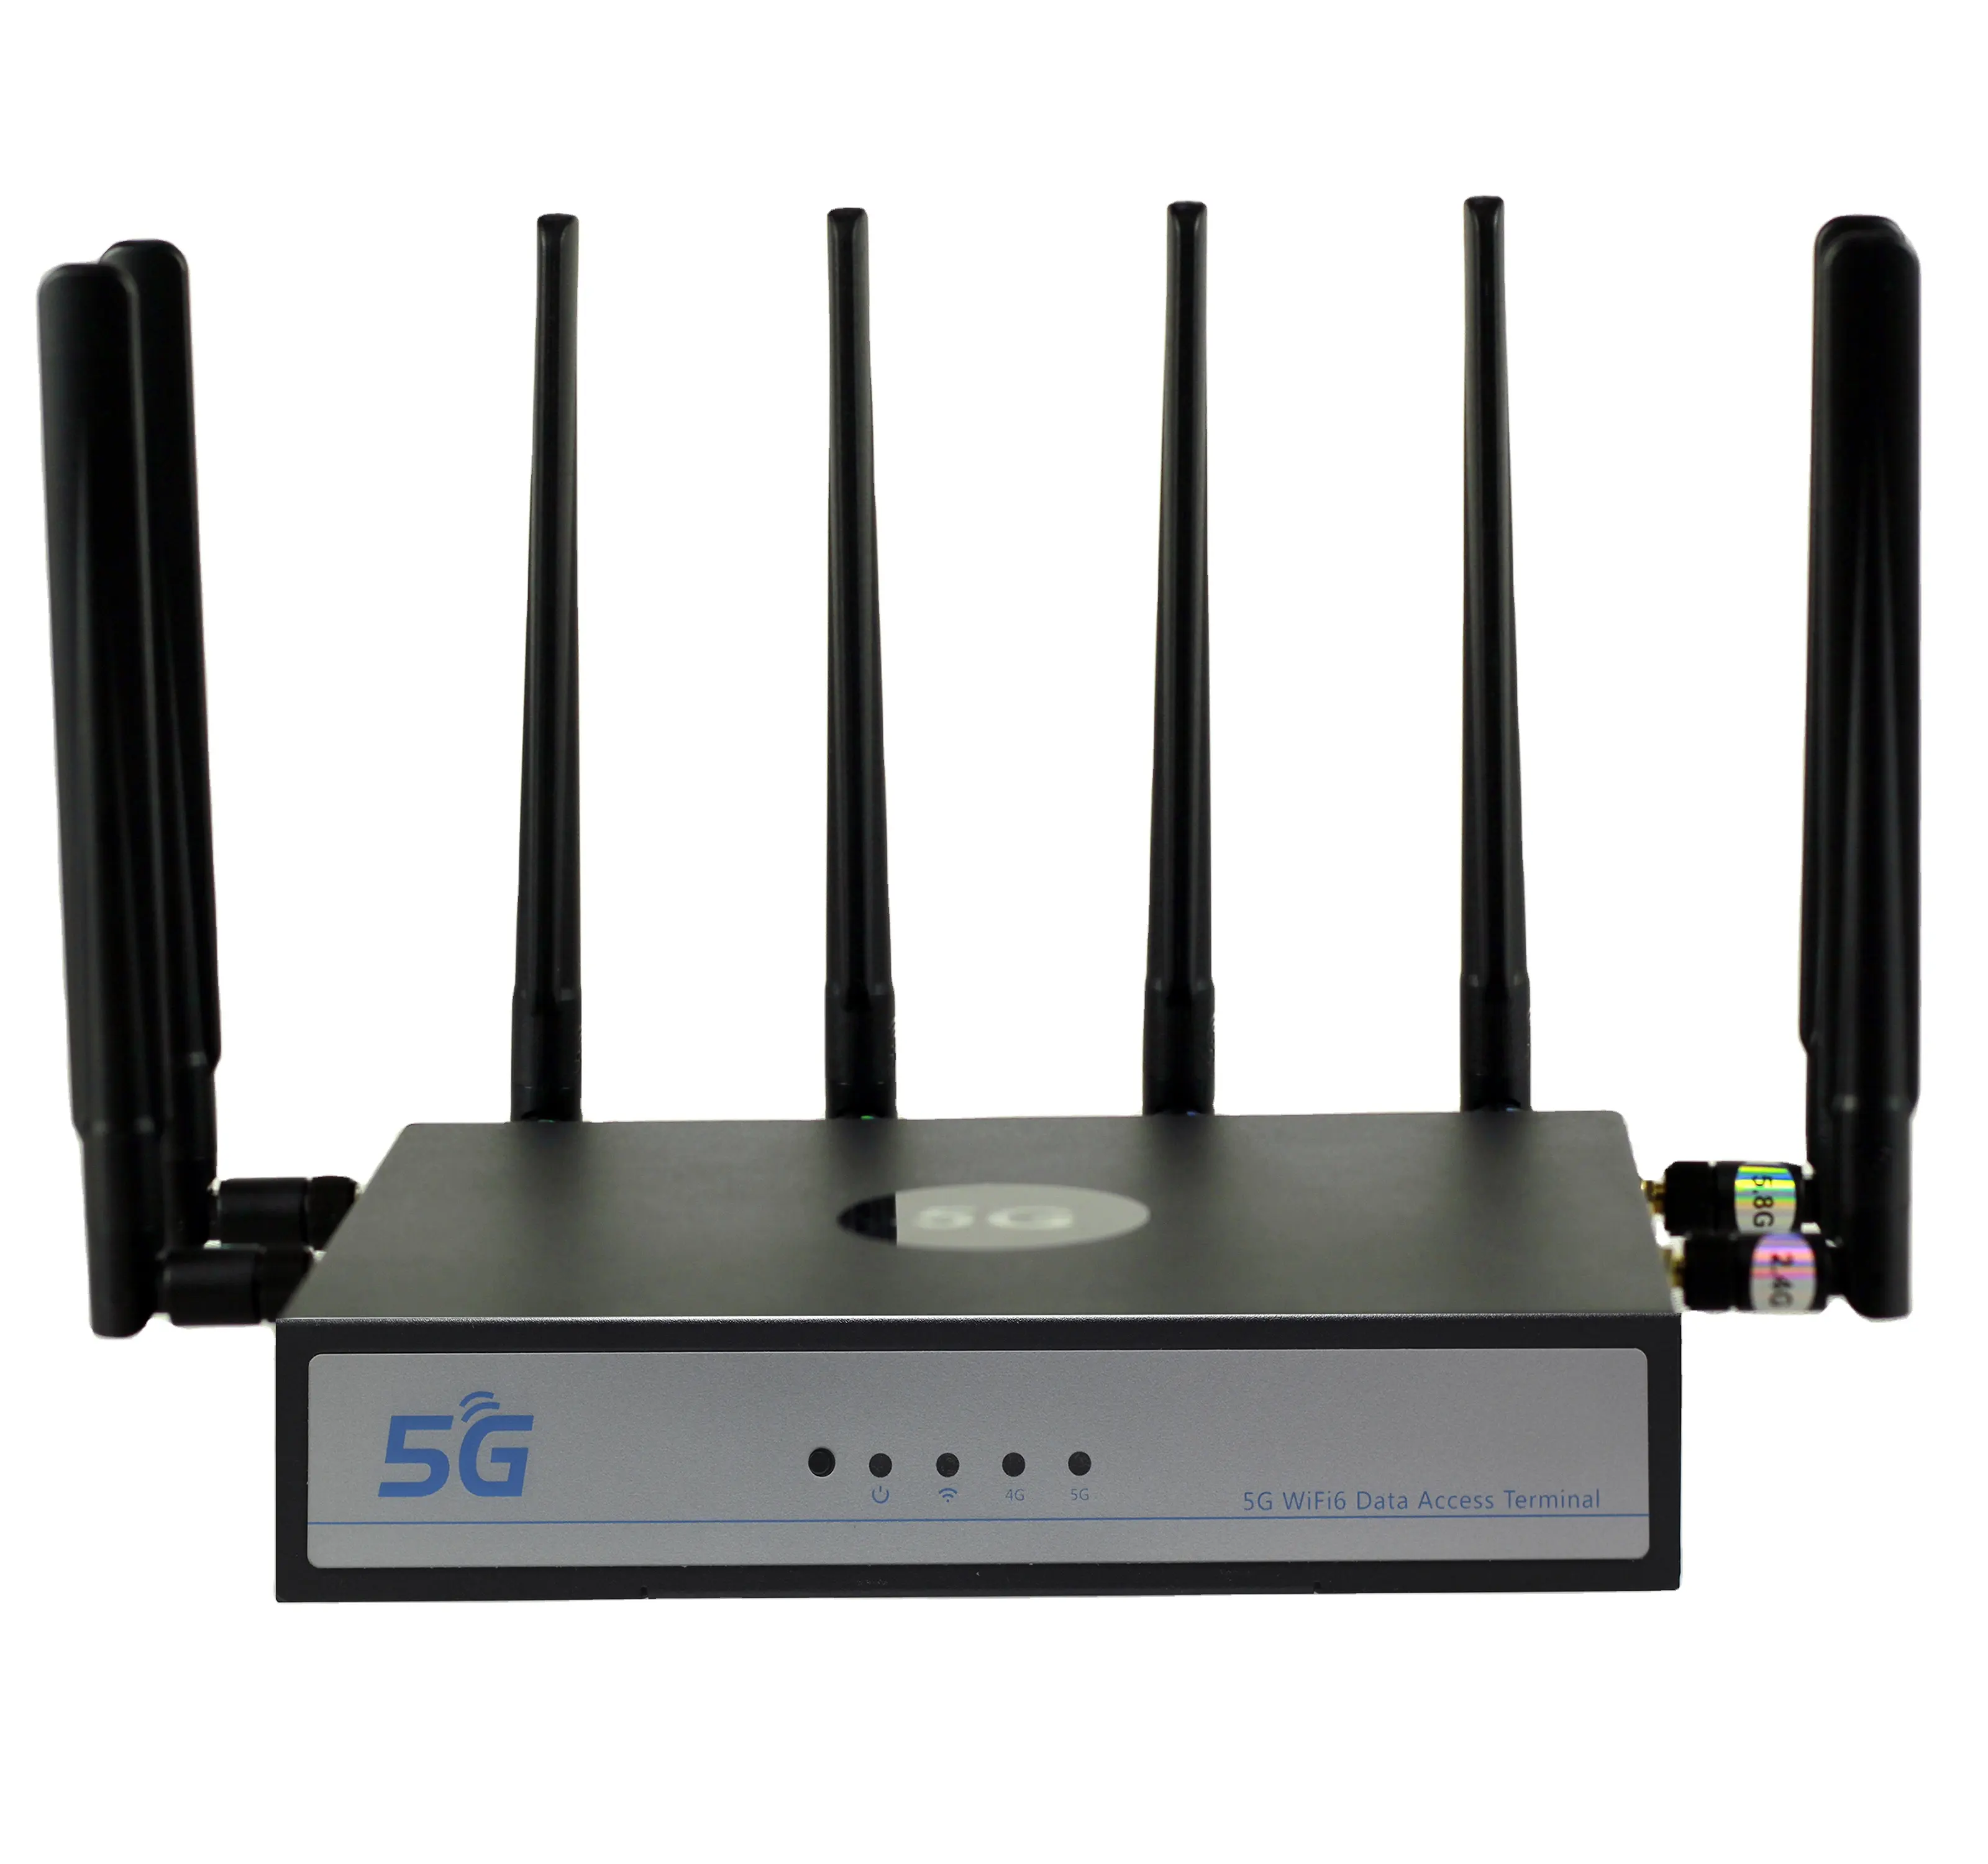 Módem móvil 5g CPE WIFI 6, enrutador con ranura para tarjeta SIM, antena externa, oferta de EE. UU.